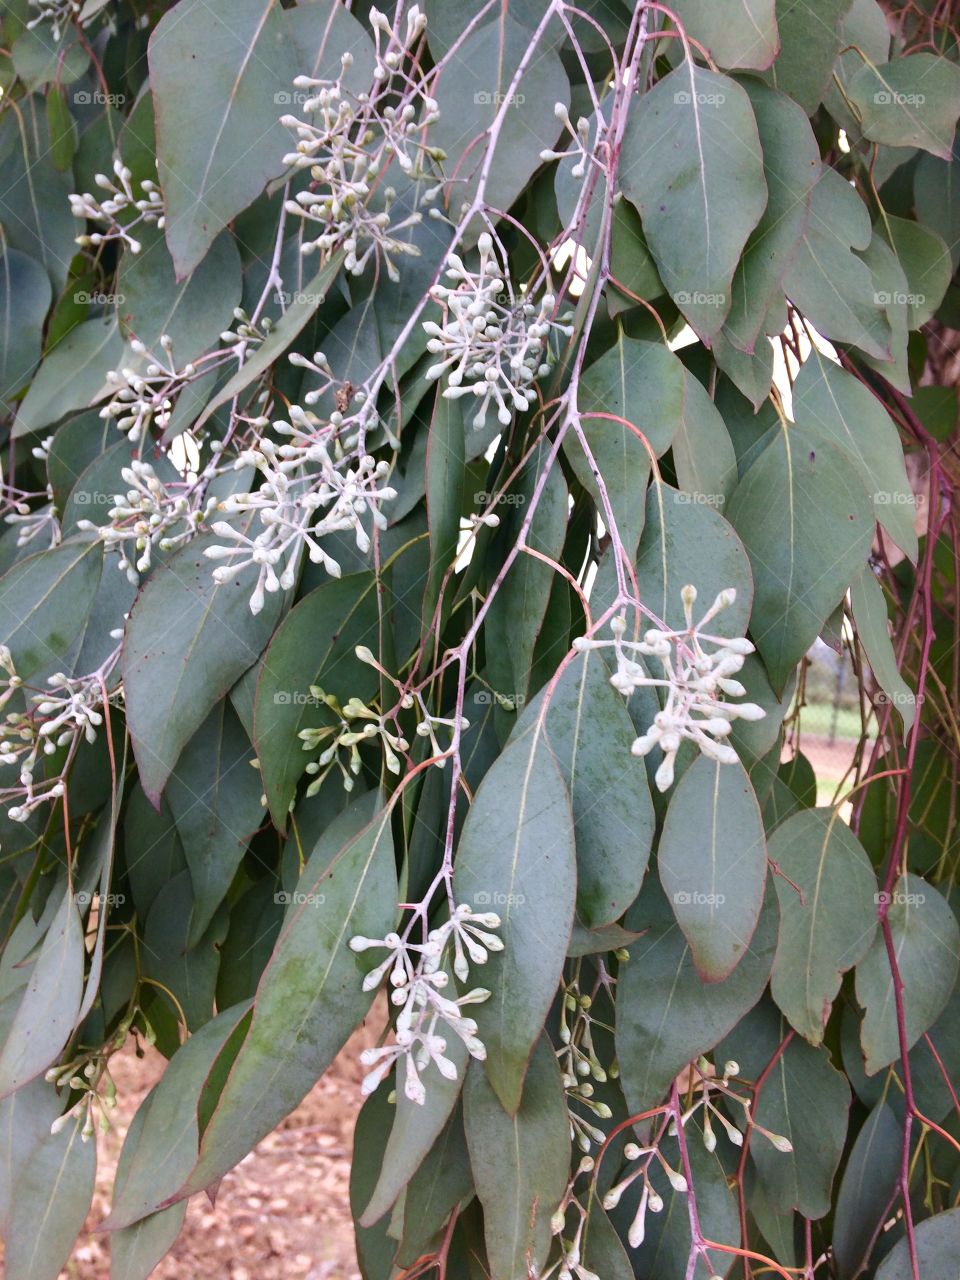 Eucalyptus buds